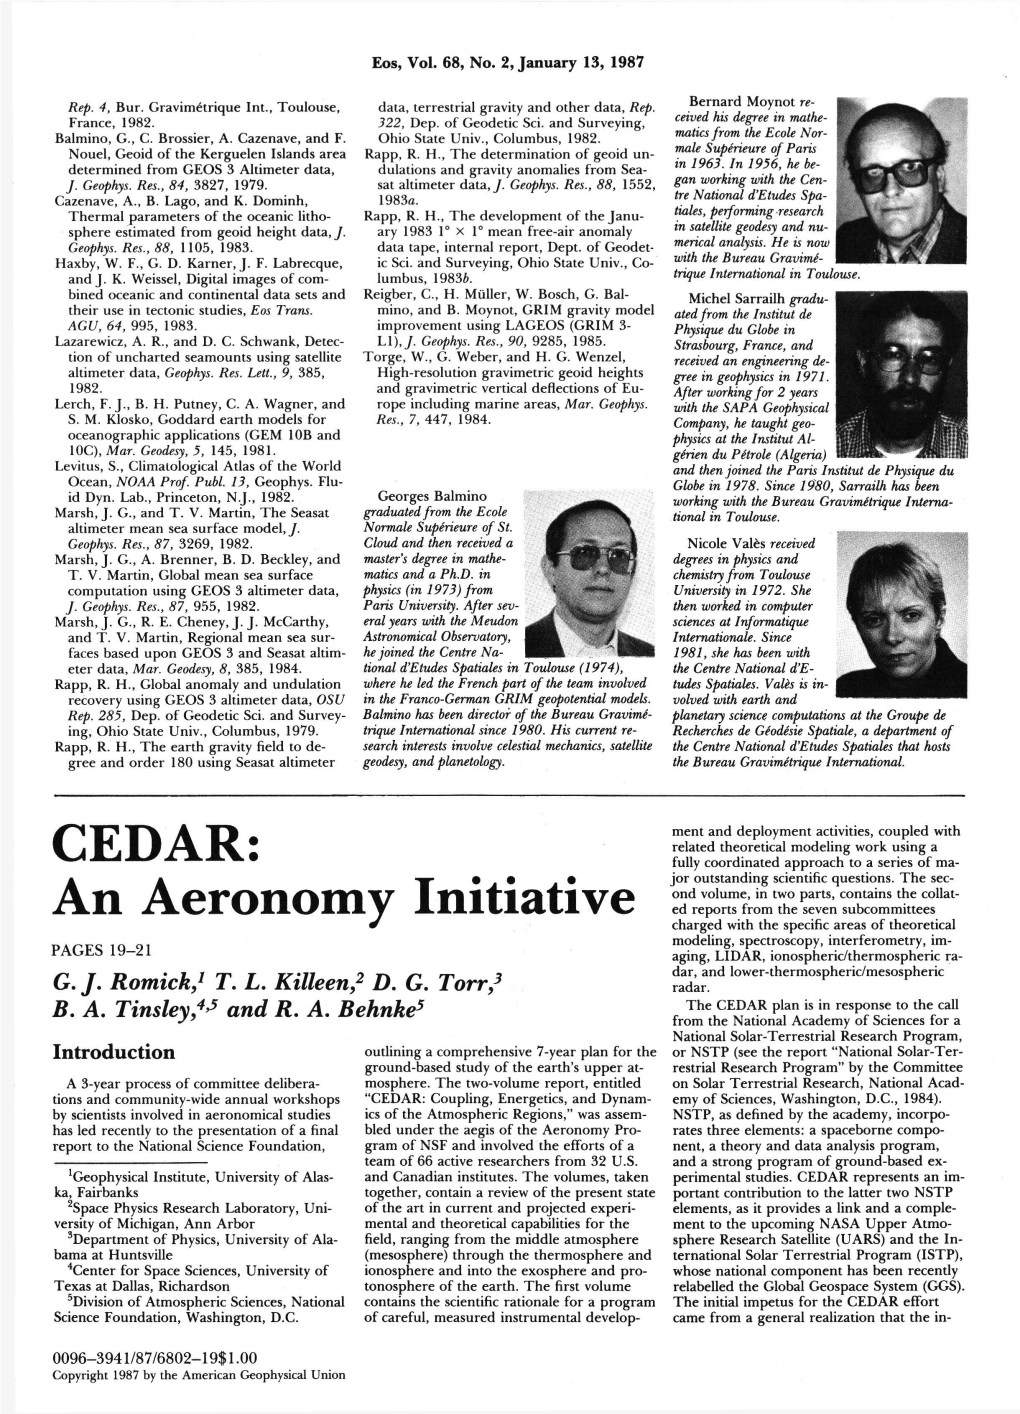 CEDAR an Aeronomy Initiative